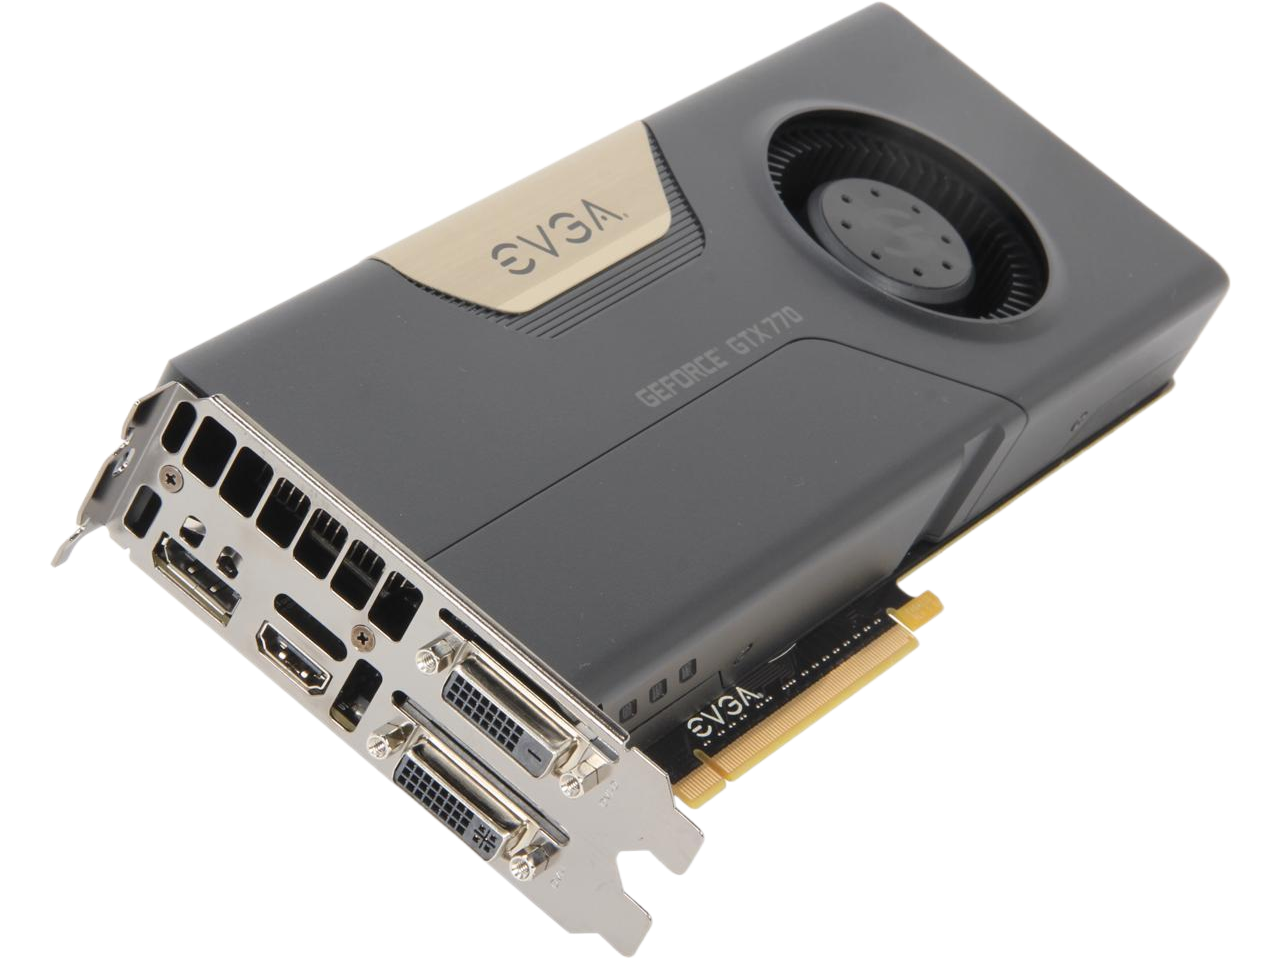 EVGA GeForce GTX 770 2GB 256-Bit GDDR5 G-SYNC Support PCI Express 3.0 SLI Support Video Card 02G-P4-2770-KR